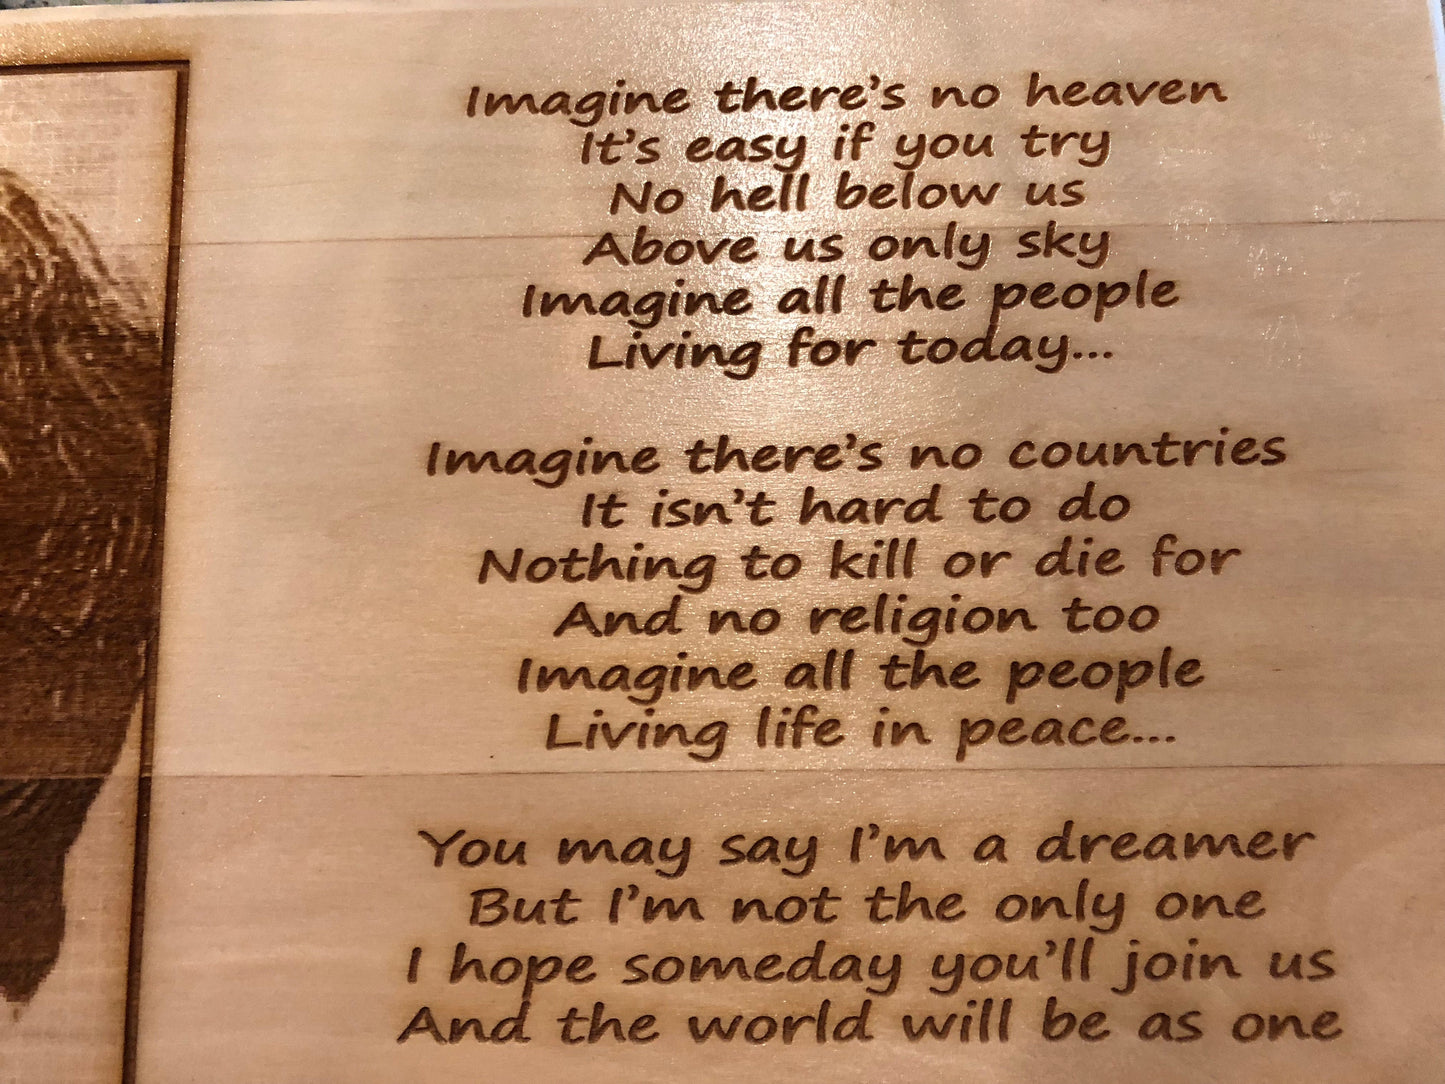 Wall Plaque, John Lennon - Imagine,  Picture and Lyrics